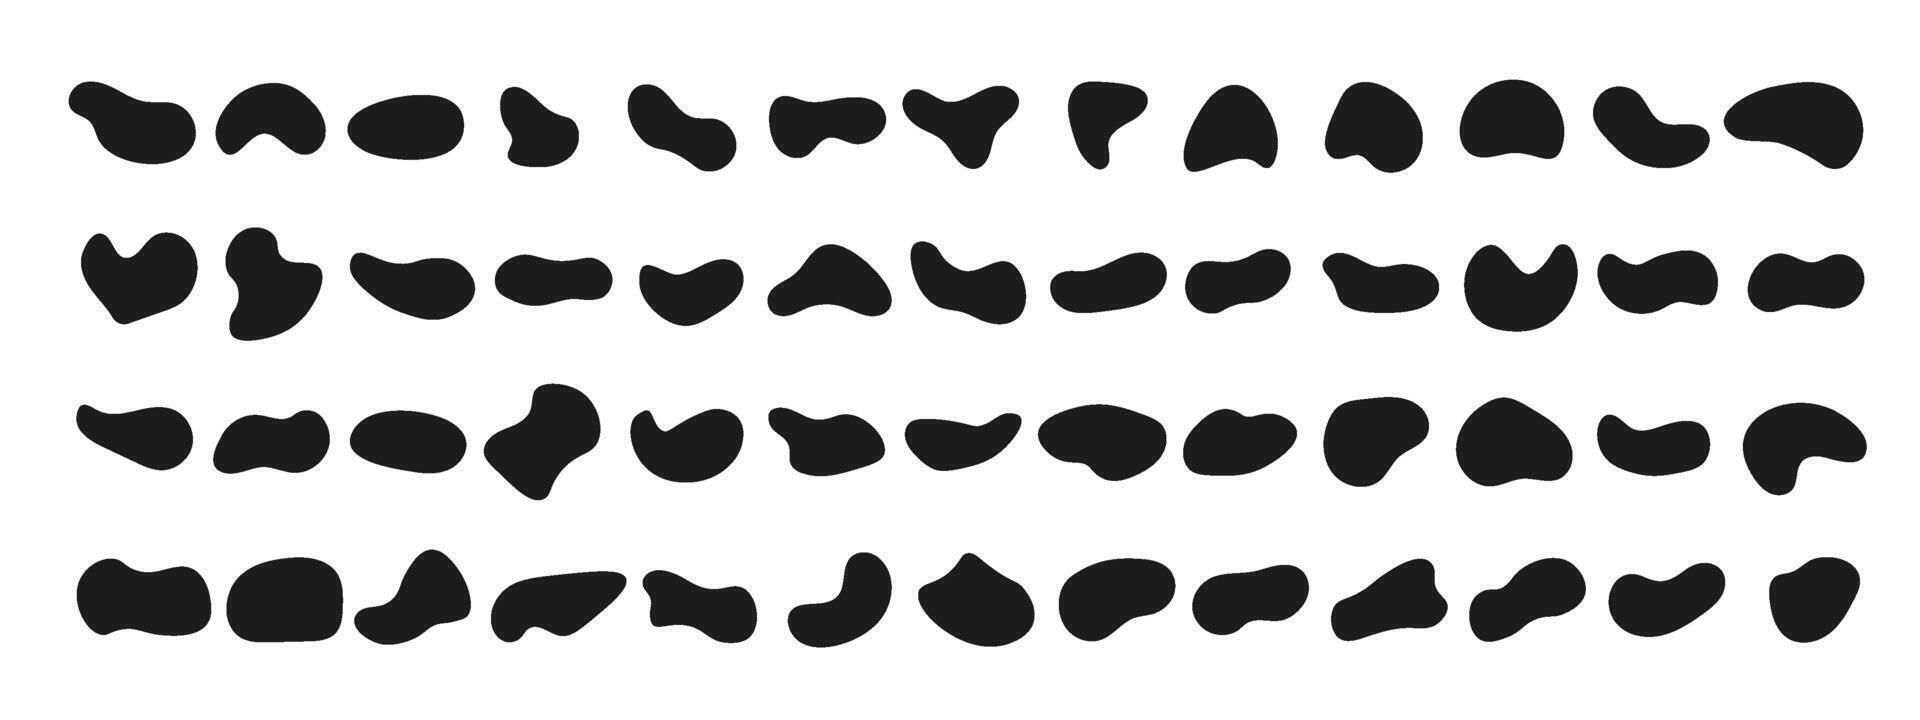 Set blob shapes .  Arbitrary figures of irregular shape.   Black abstract blotches, liquid elements.  Ink blots and pebble silhouettes. Vector illustration